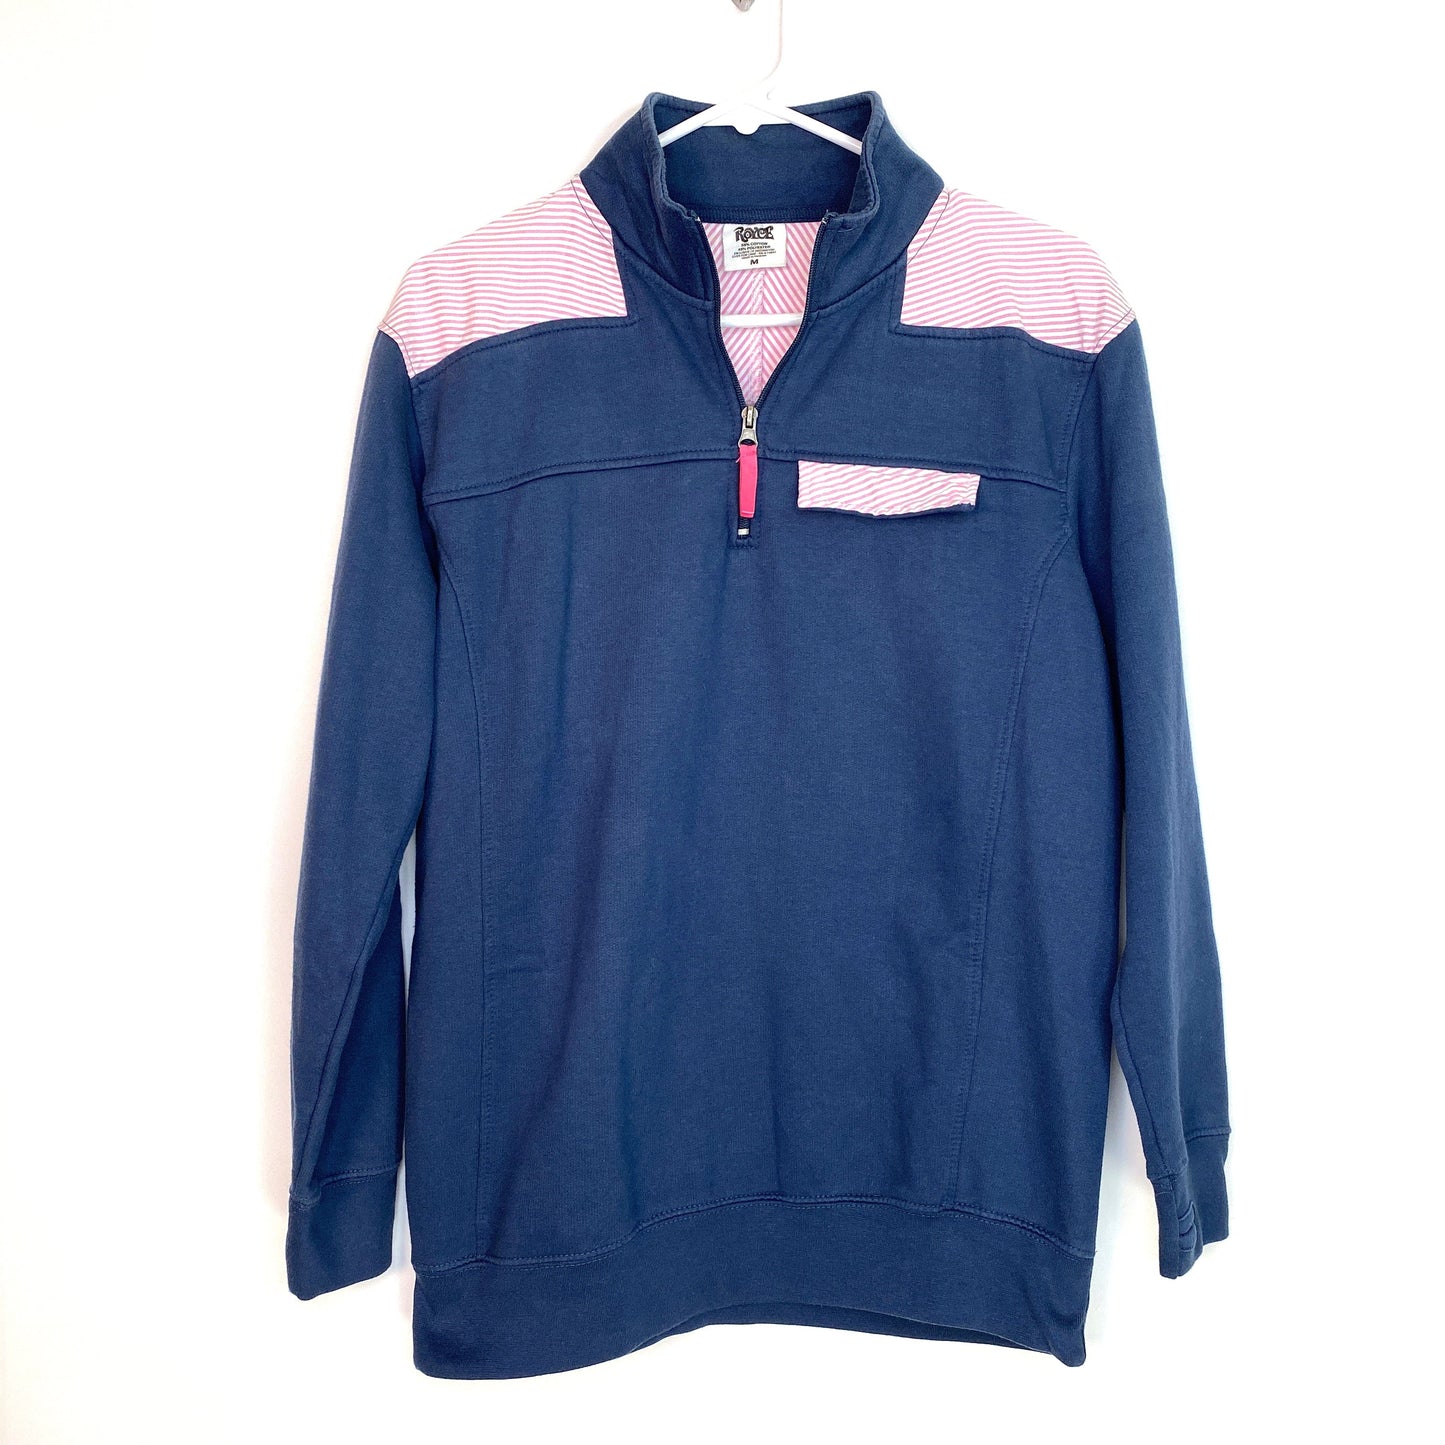 Royce Womens Size M Blue w/ Pink White Seersucker ¼ Zip Sweatshirt